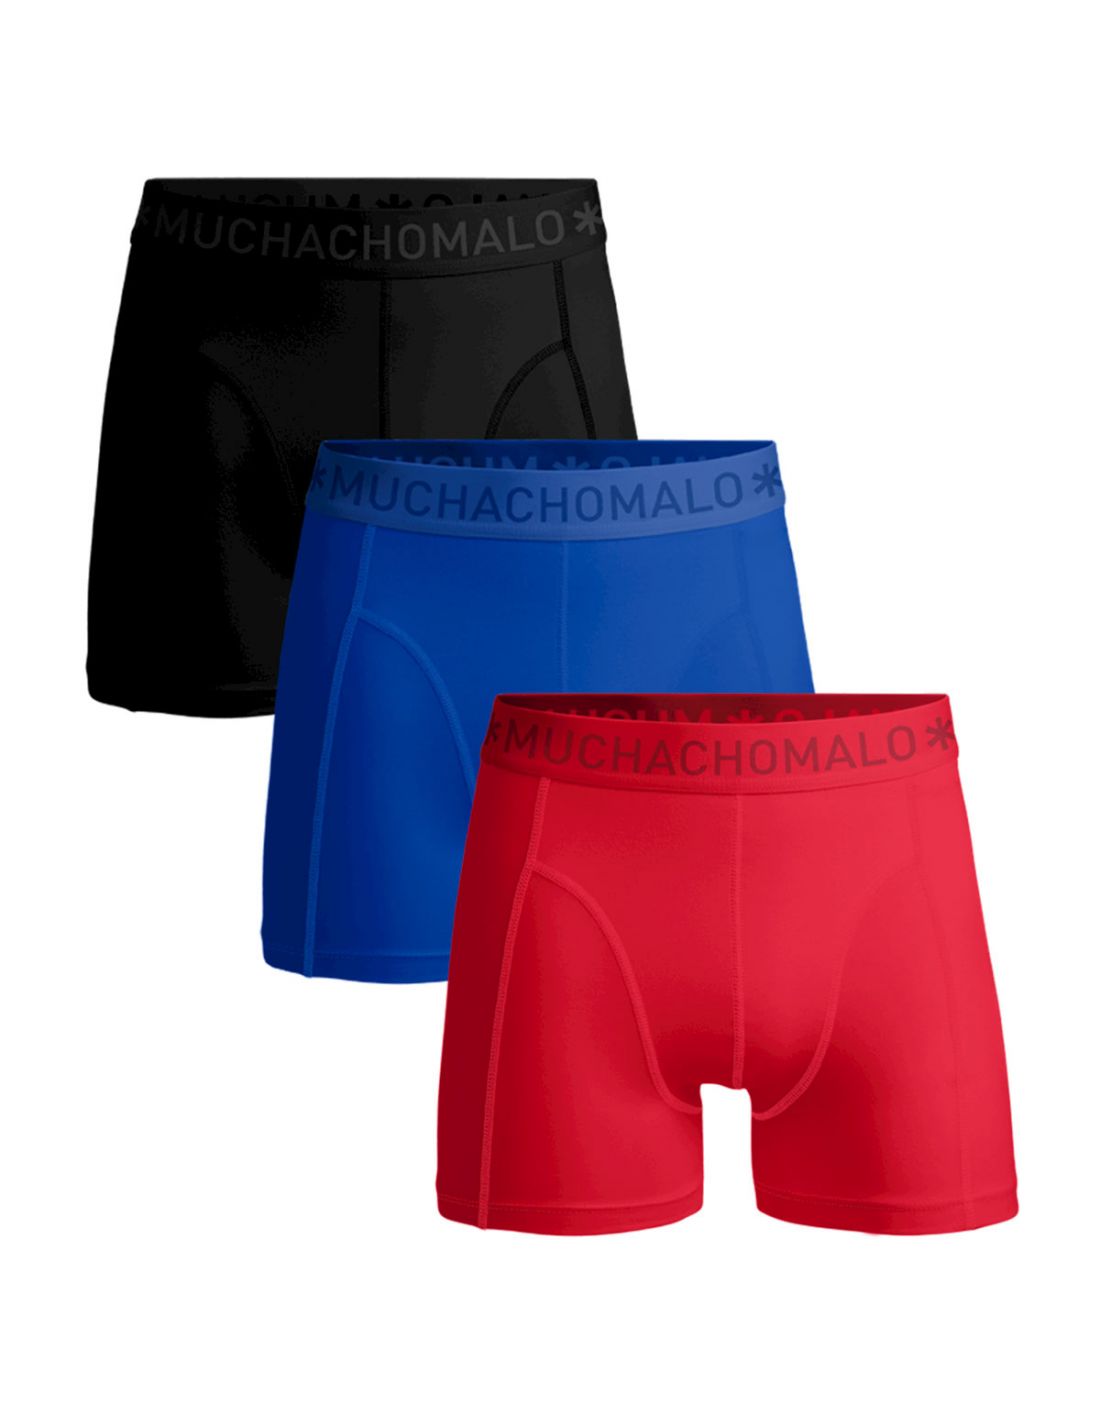 rand Nationale volkstelling Concessie MuchachoMalo Heren Boxershorts Microfiber 3Pack Zwart Blauw Rood 33